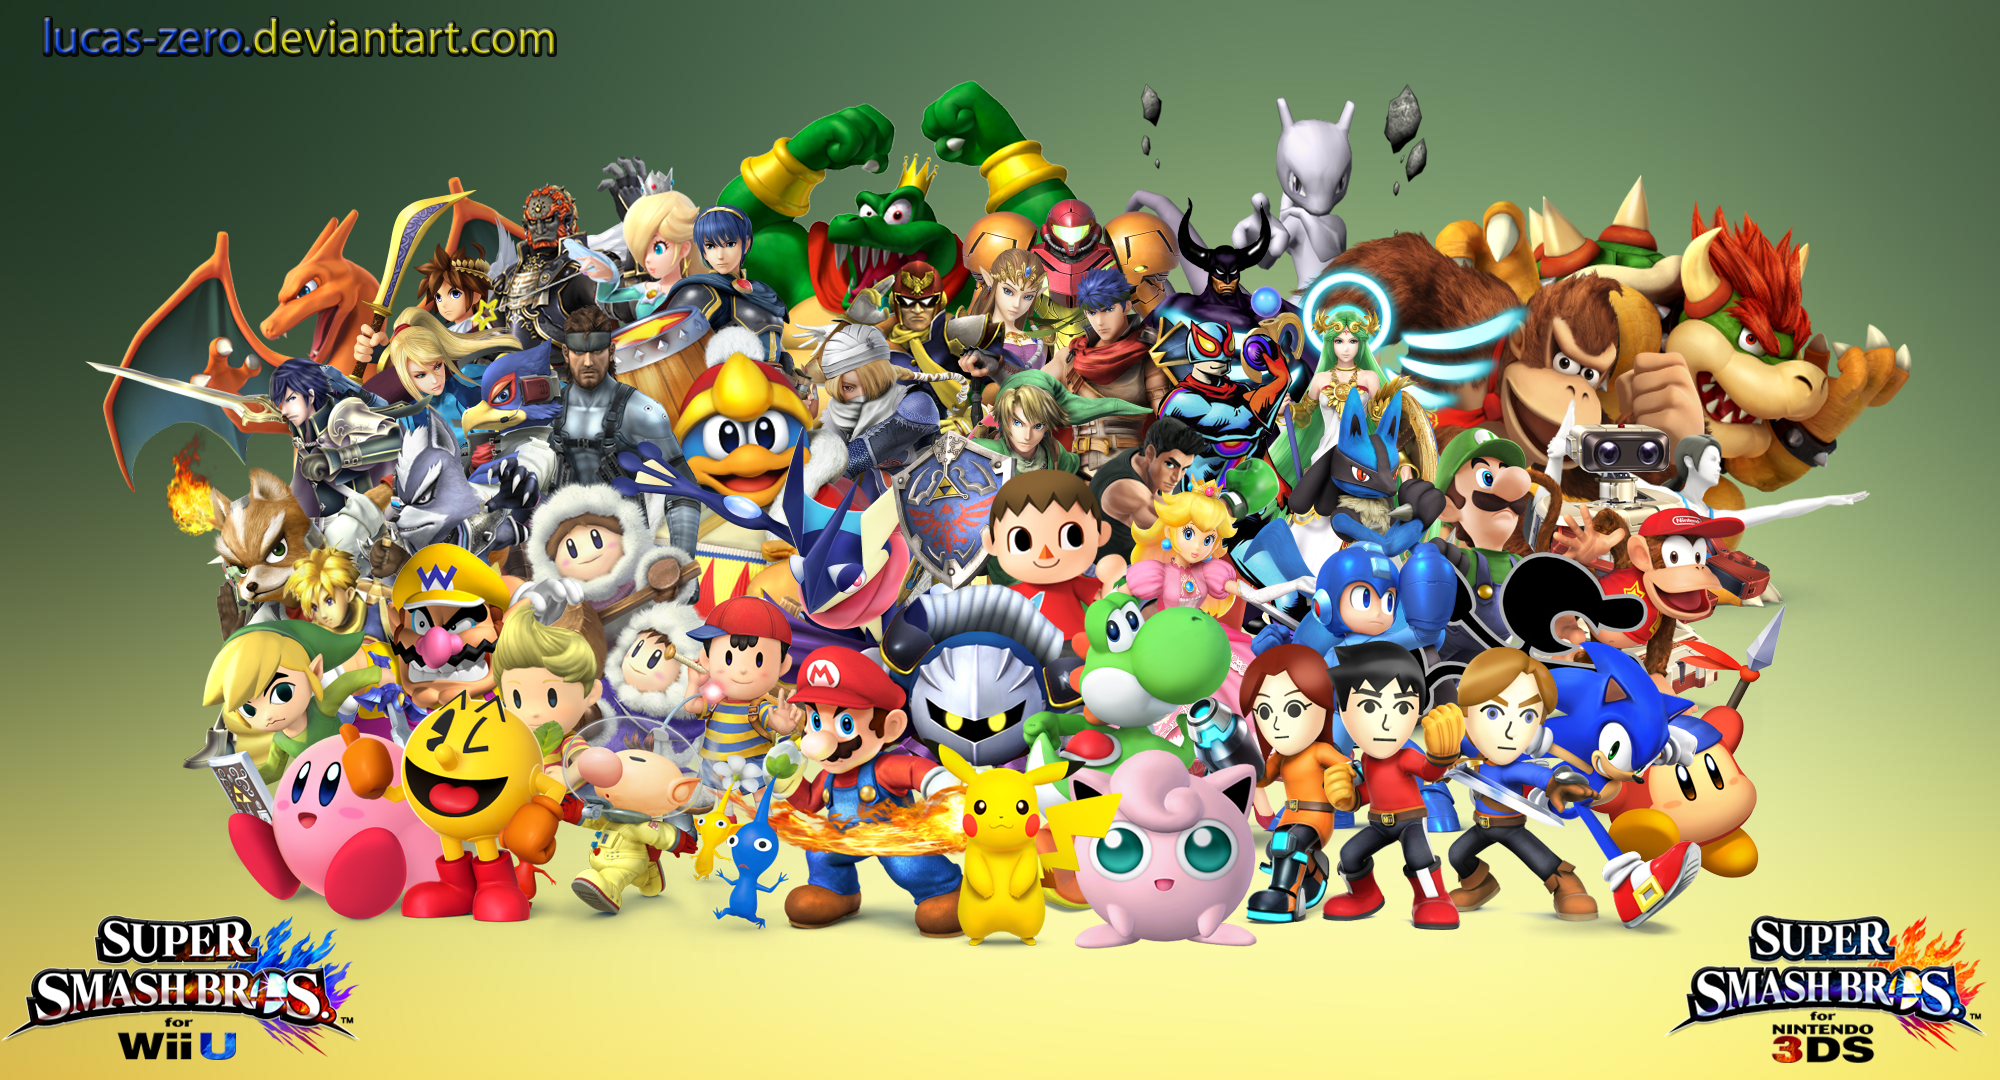 Super Smash Bros Dream Roster Wallpaper By Lucas Zero